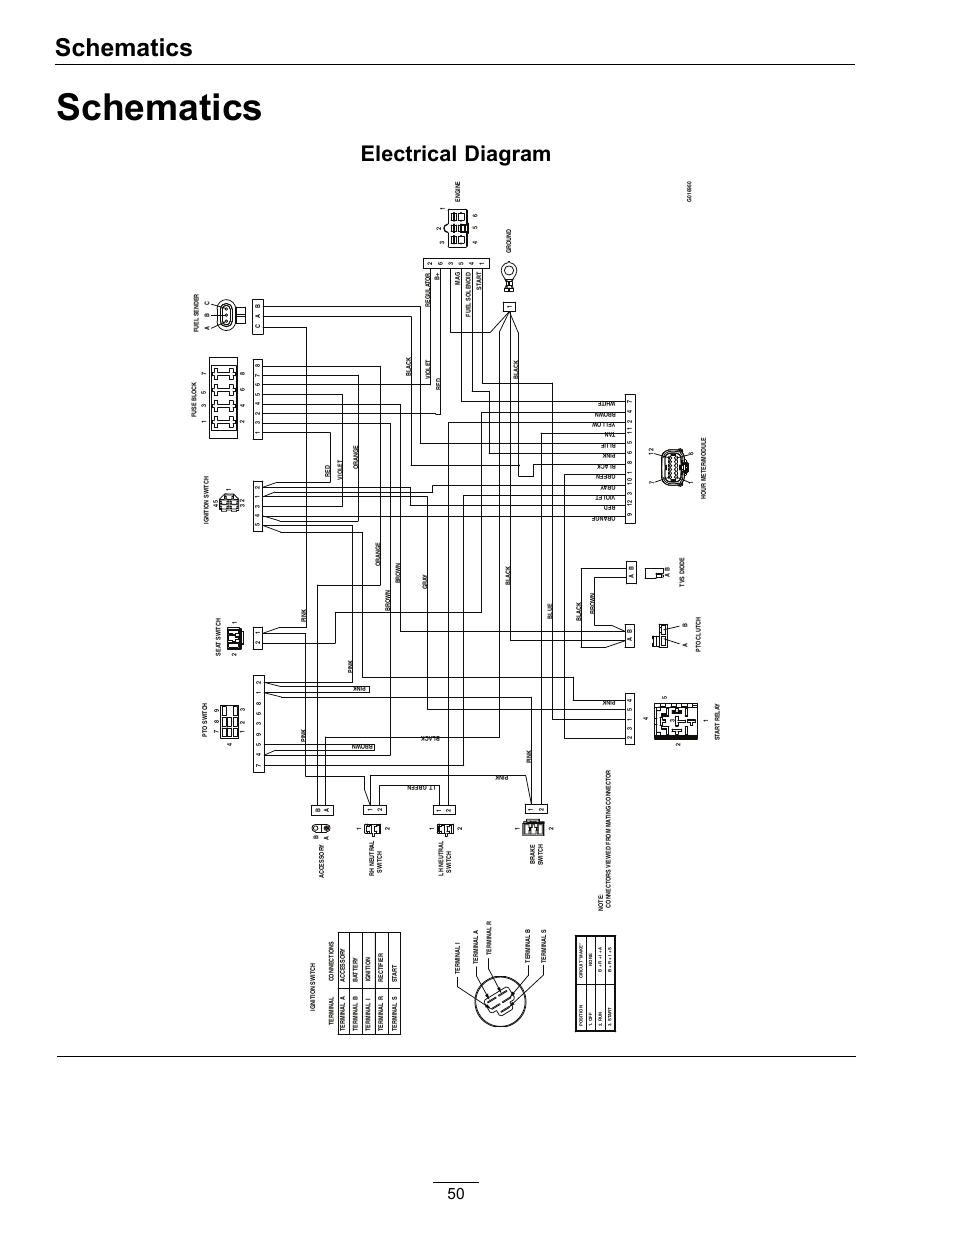 massimo msu 500 wiring diagram